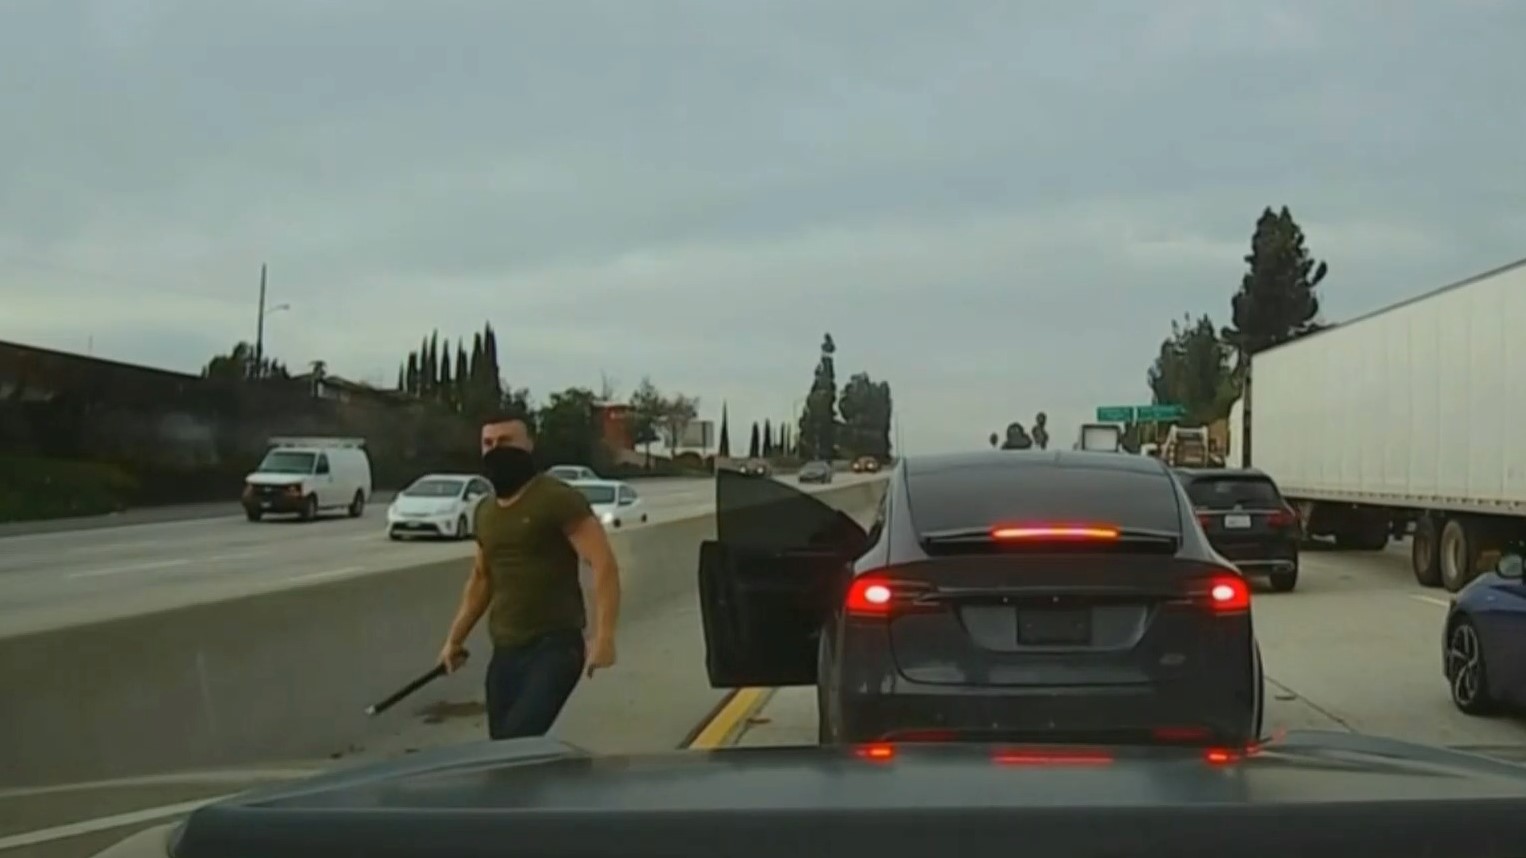 Suspect Arrested in Tesla Road Rage Confrontation Caught on Dashcam